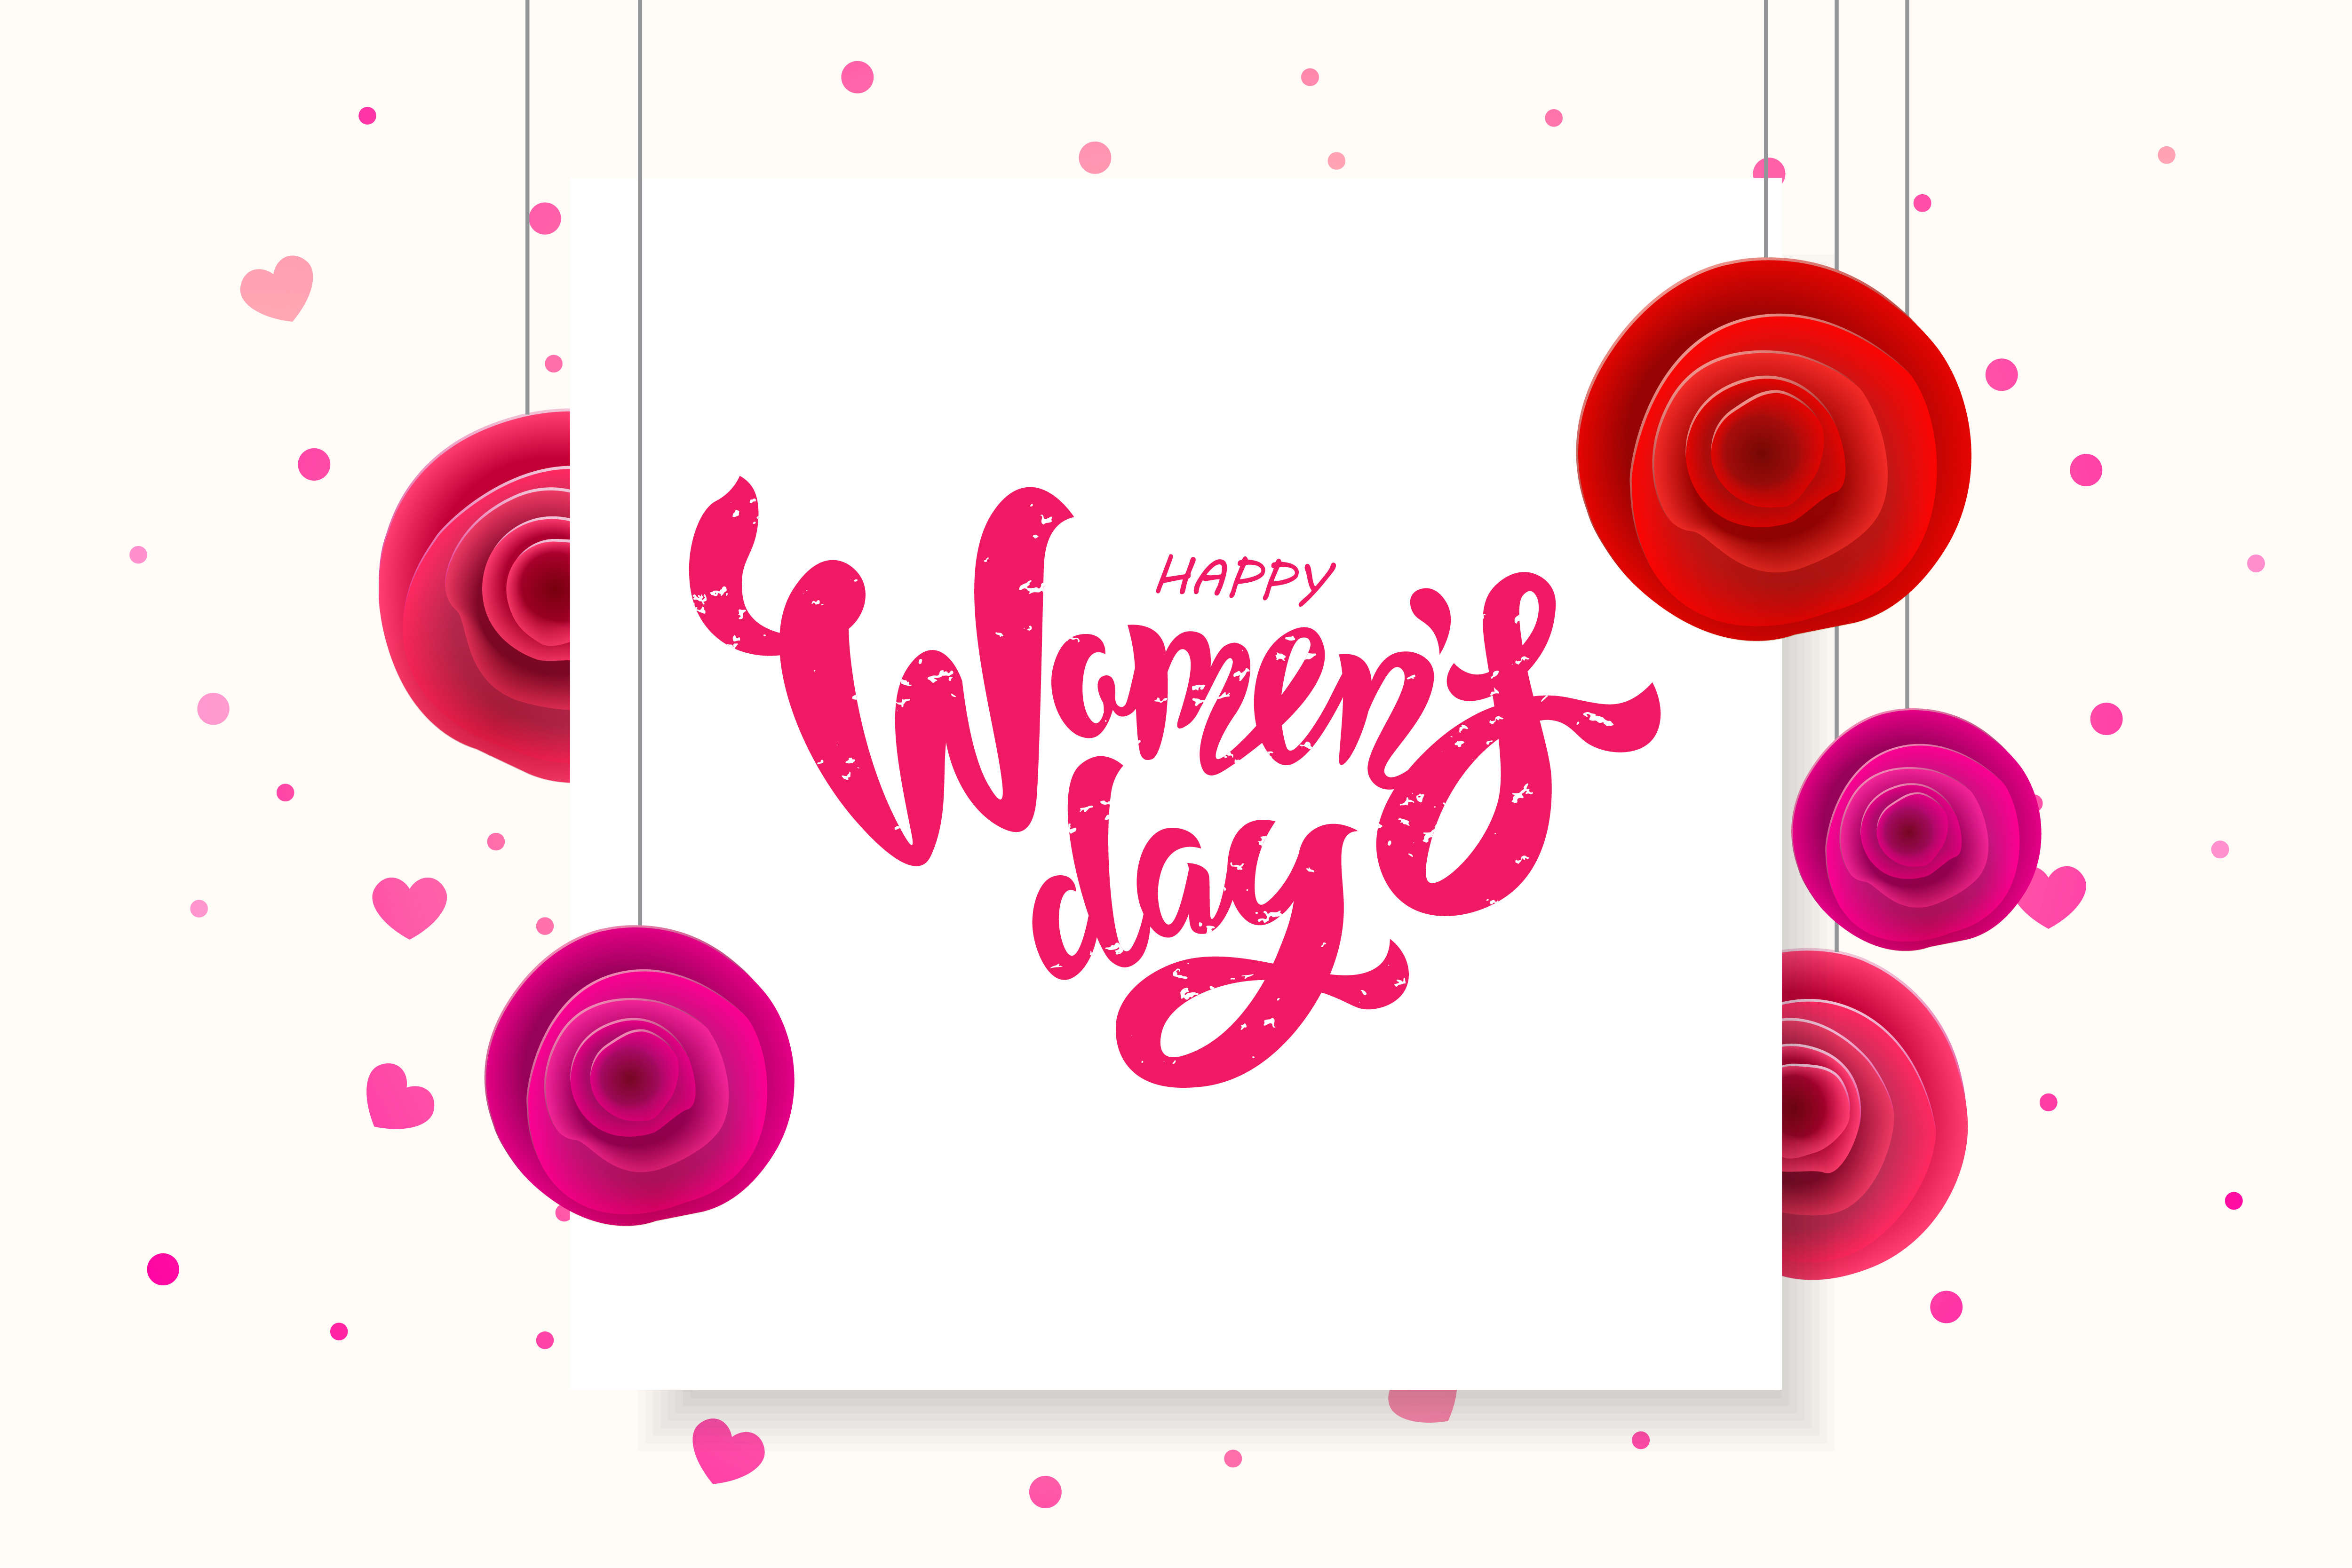 international women's day 2019 gift ideas